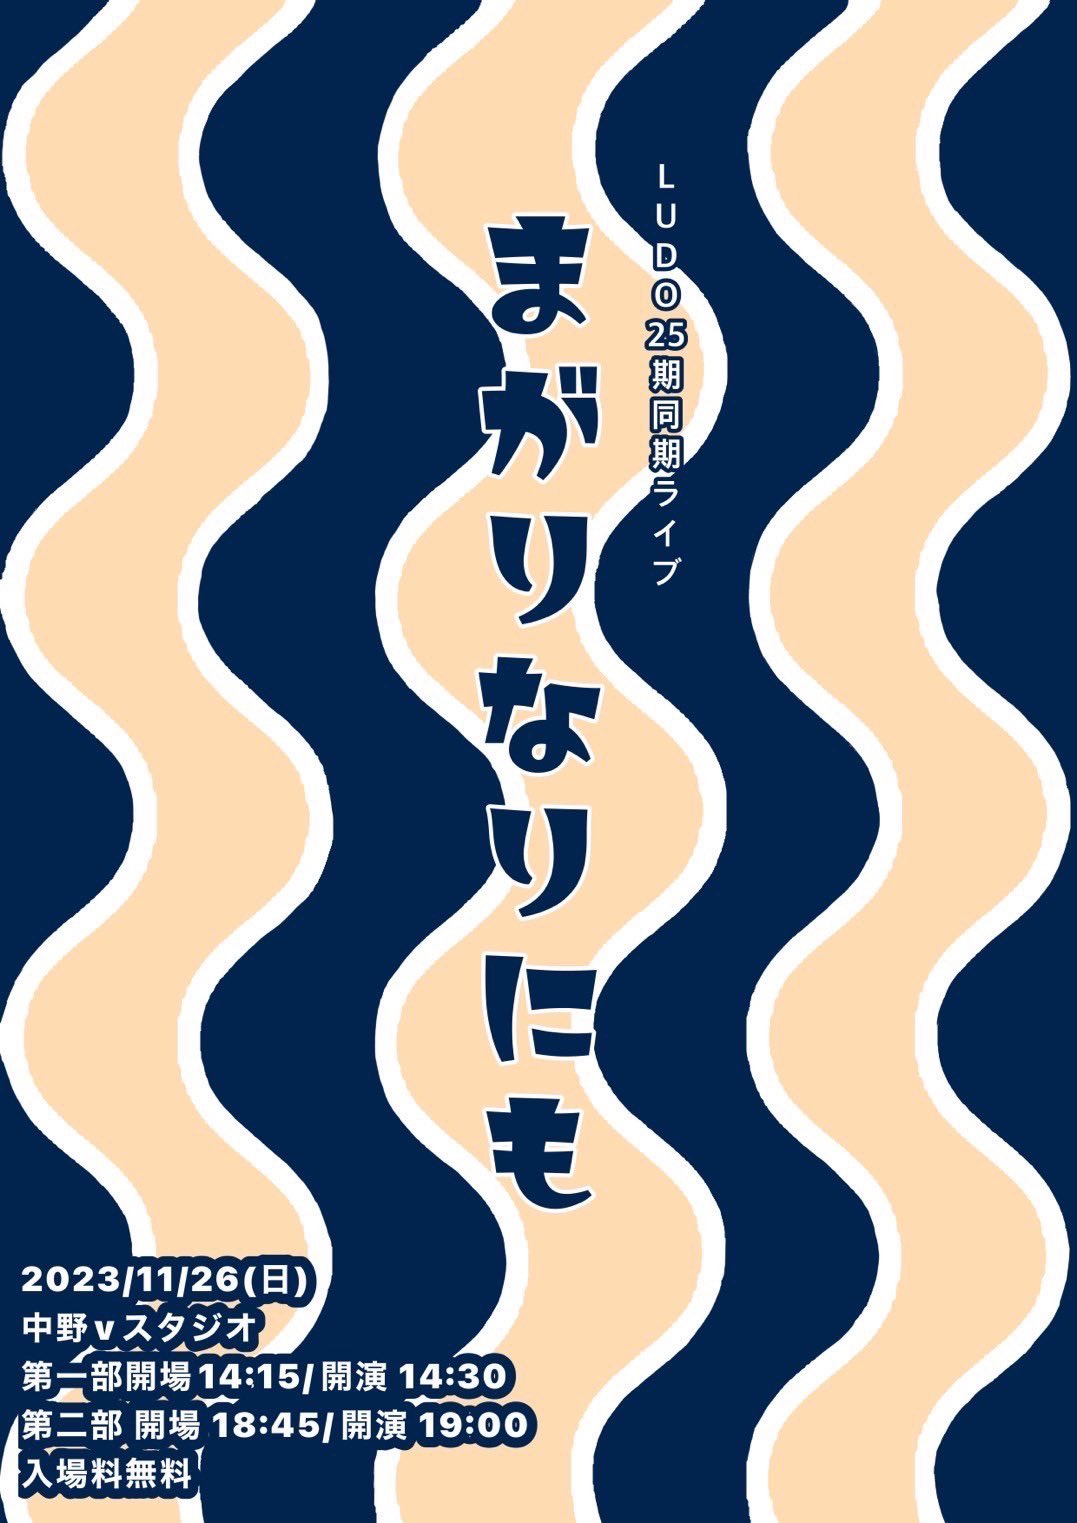 Tensei shitara slime datta ken by 蓬餅まつり